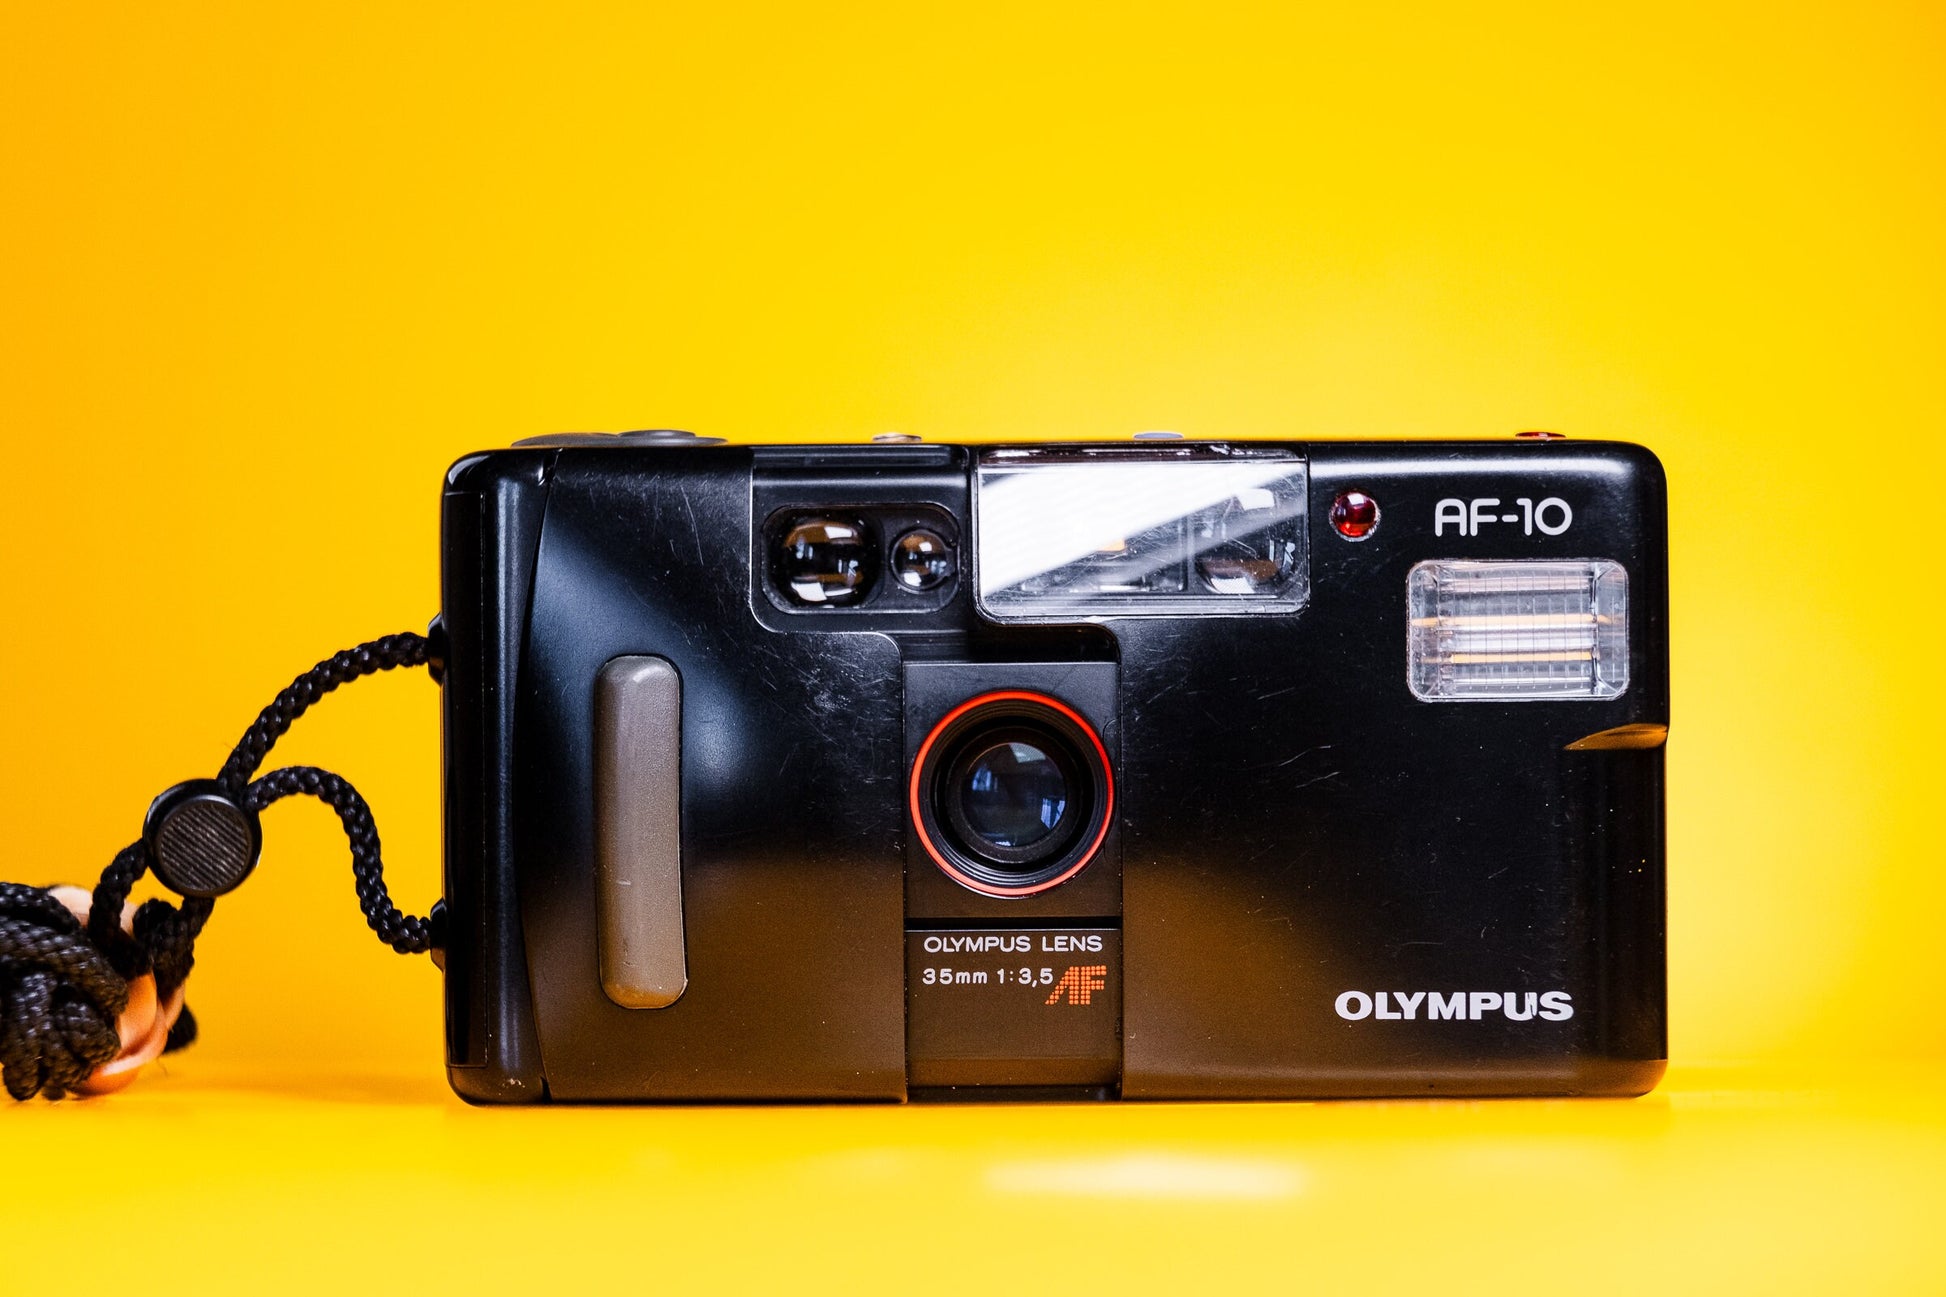 OLYMPUS AF 10 camera olympus vintage camera olympus point and shoot 35mm camera